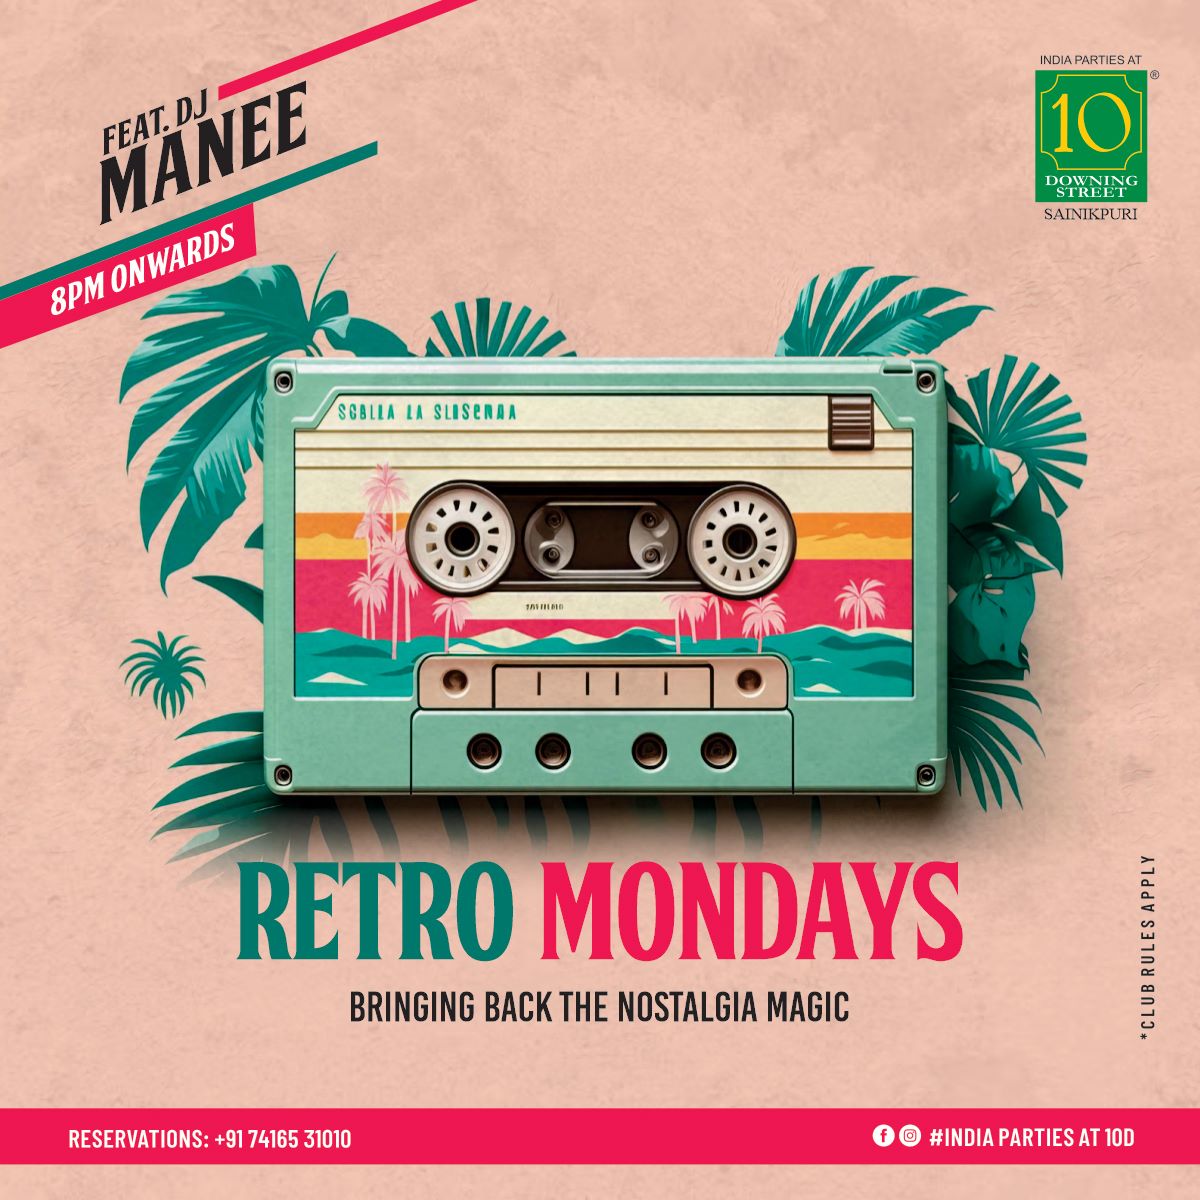 Retro Mondays- Ft Dj Manee